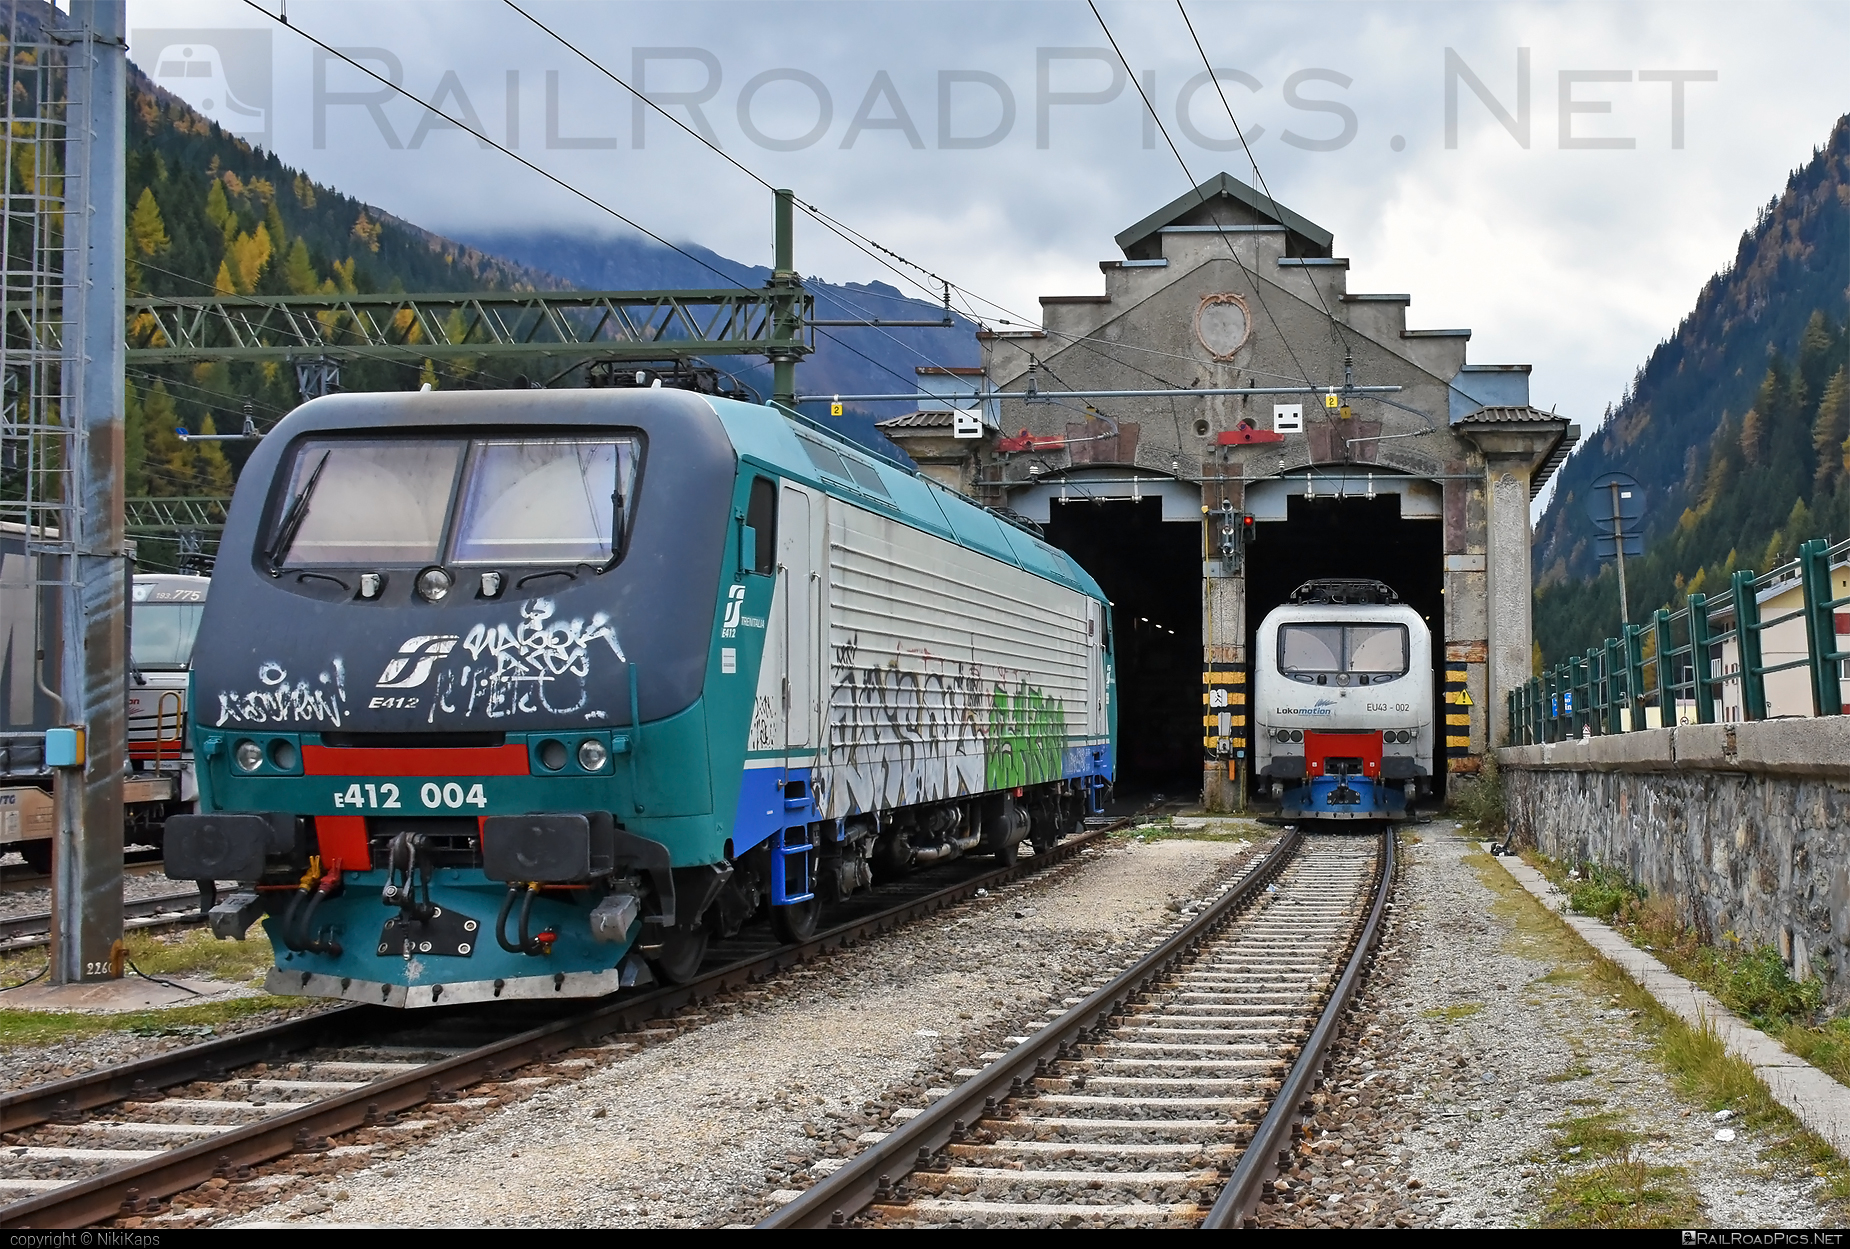 FS Class E.412 - E412 004 operated by Mercitalia Rail S.r.l. #e412 #ferroviedellostato #fs #fsClassE412 #fsitaliane #graffiti #hangar #trenitalia #trenitaliaspa